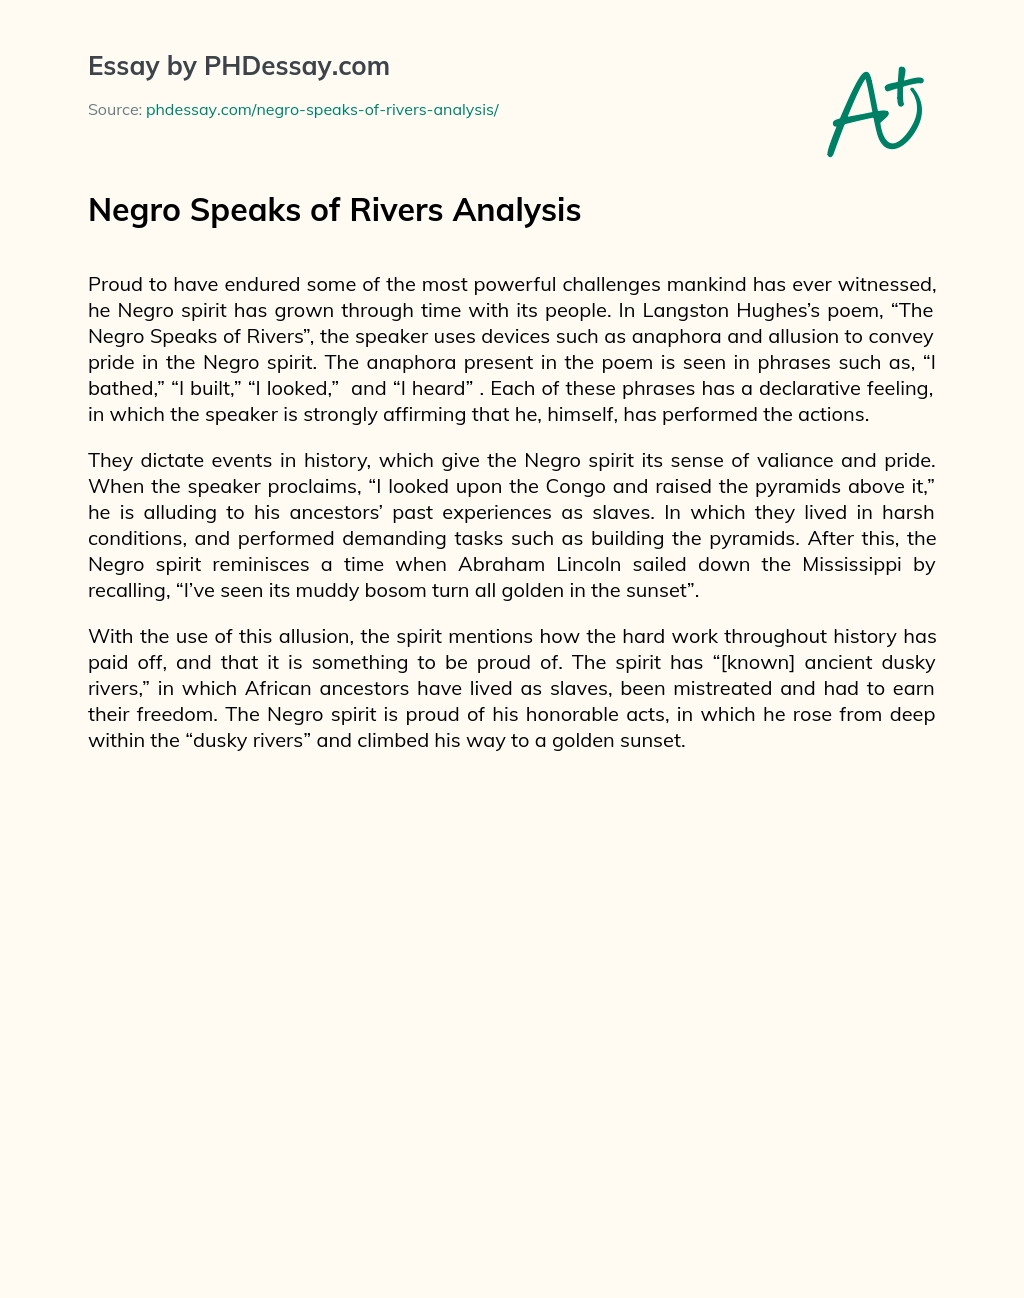 Negro Speaks of Rivers Analysis essay